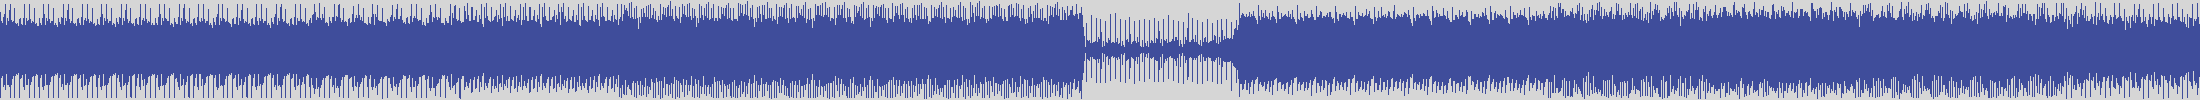 nf_boyz_records [NFY021] Olga Nesh - Liquid Story [After Mix] audio wave form